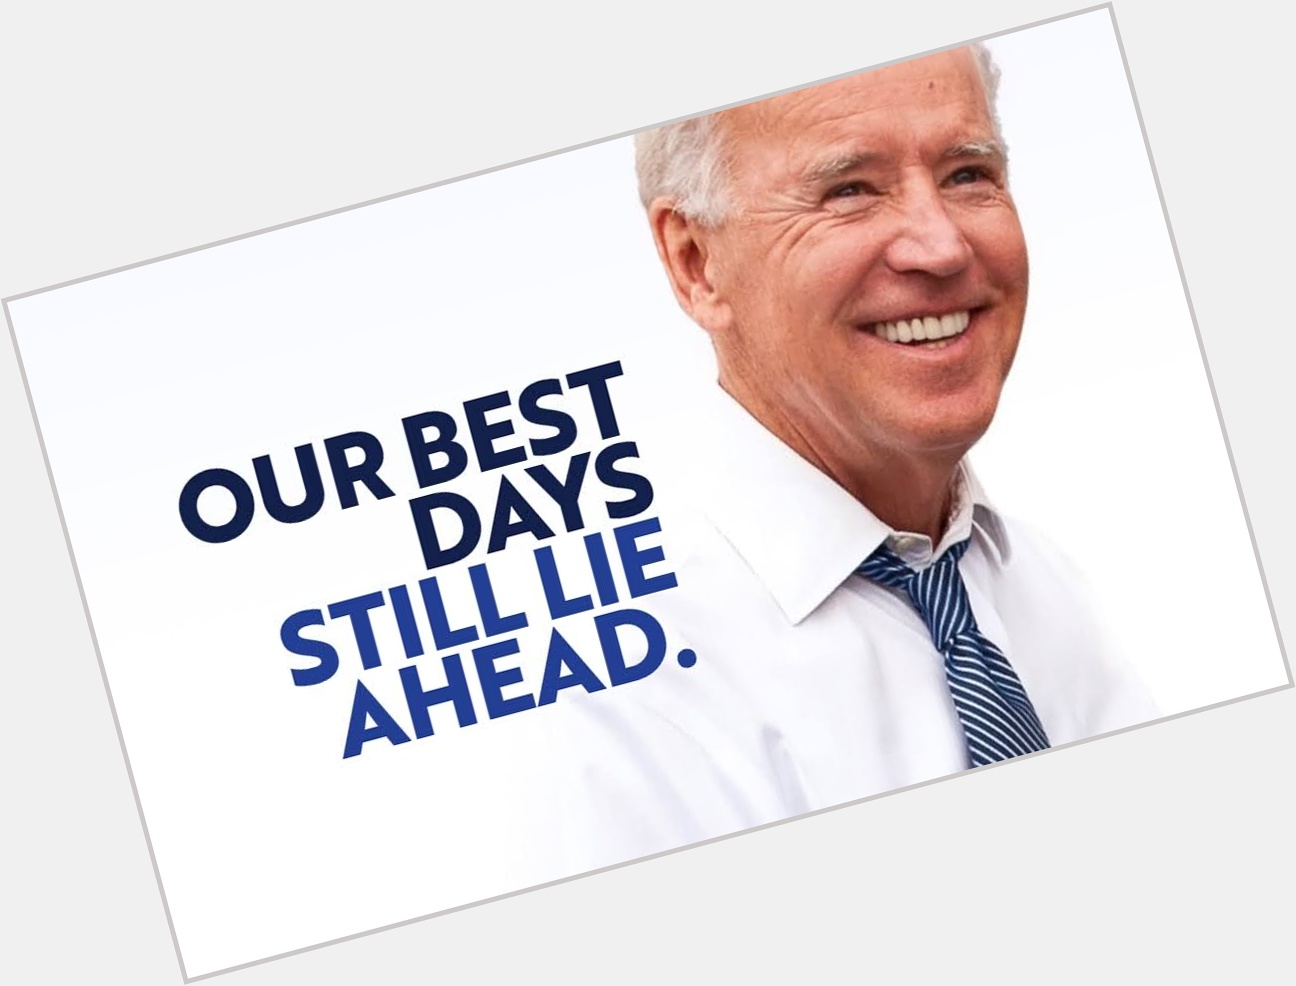 Happy Birthday Joe Biden! Your my President! 